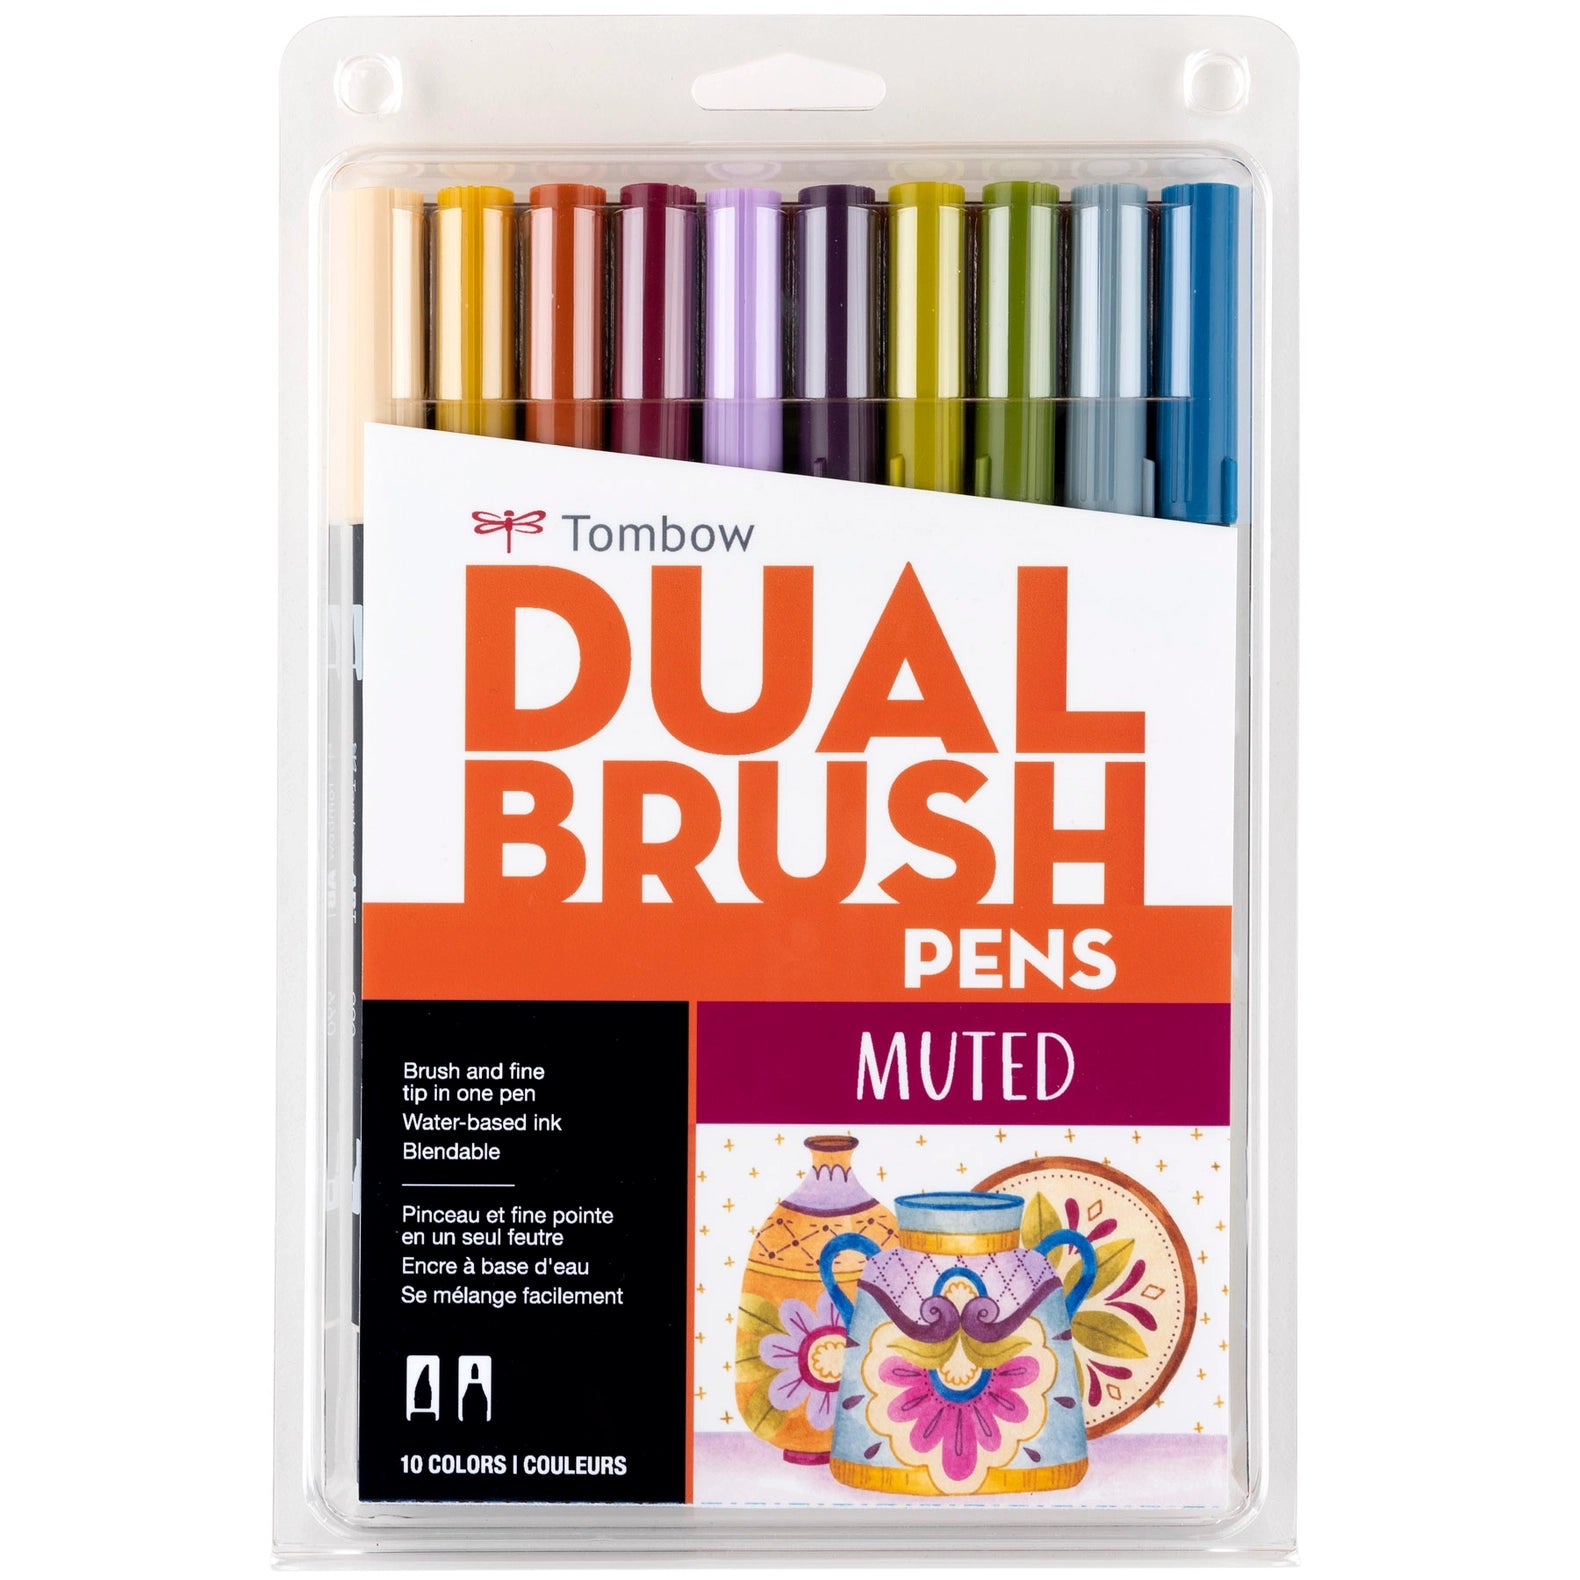 Muted Dual Brush Art Markers - 10 Pk